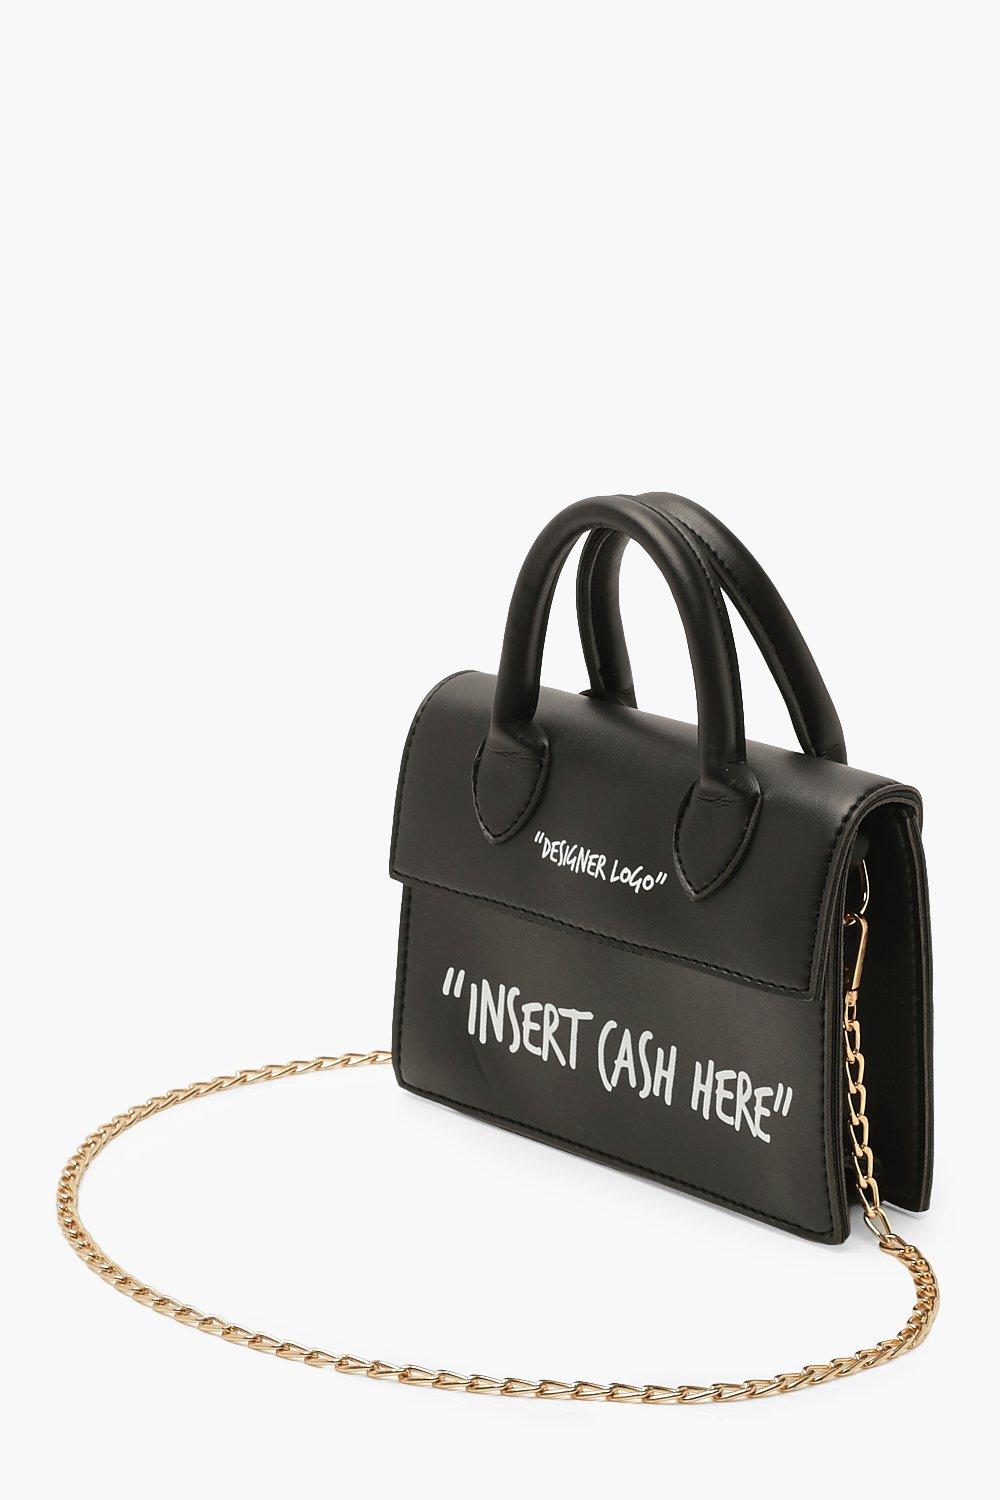 Cash inside logo bag